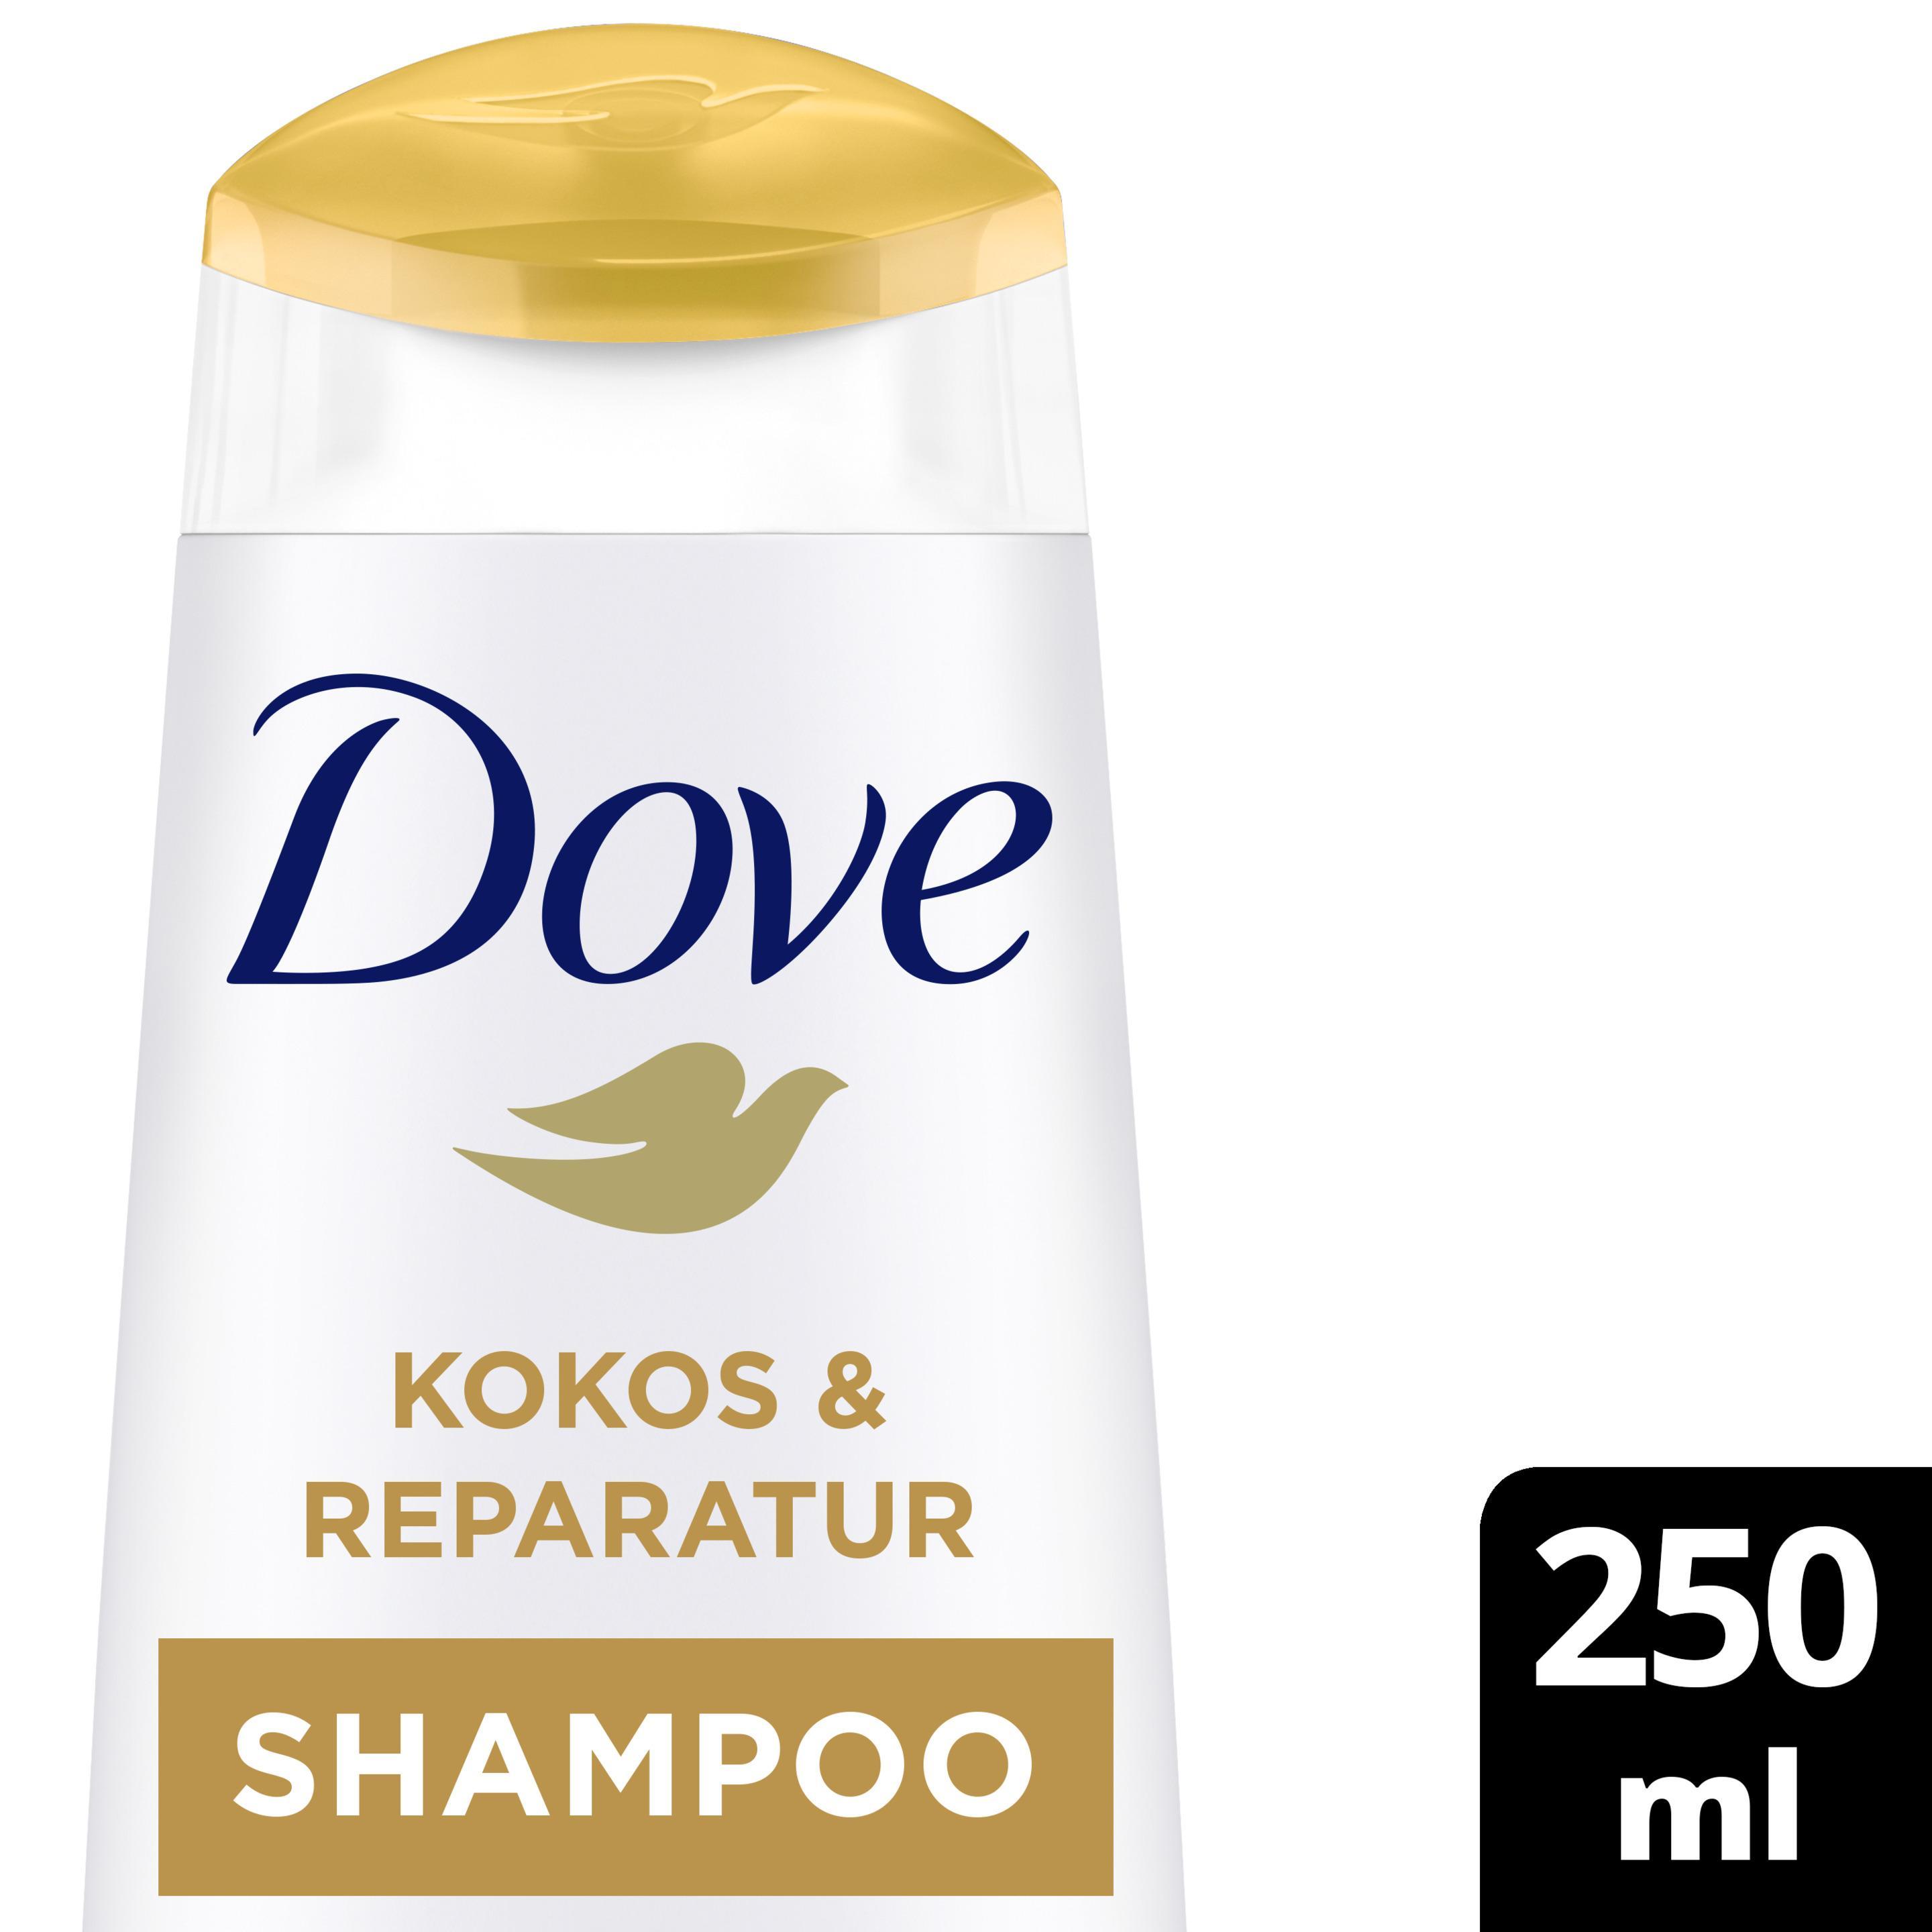 Dove Shampoo Kokos & Reparatur 250ml